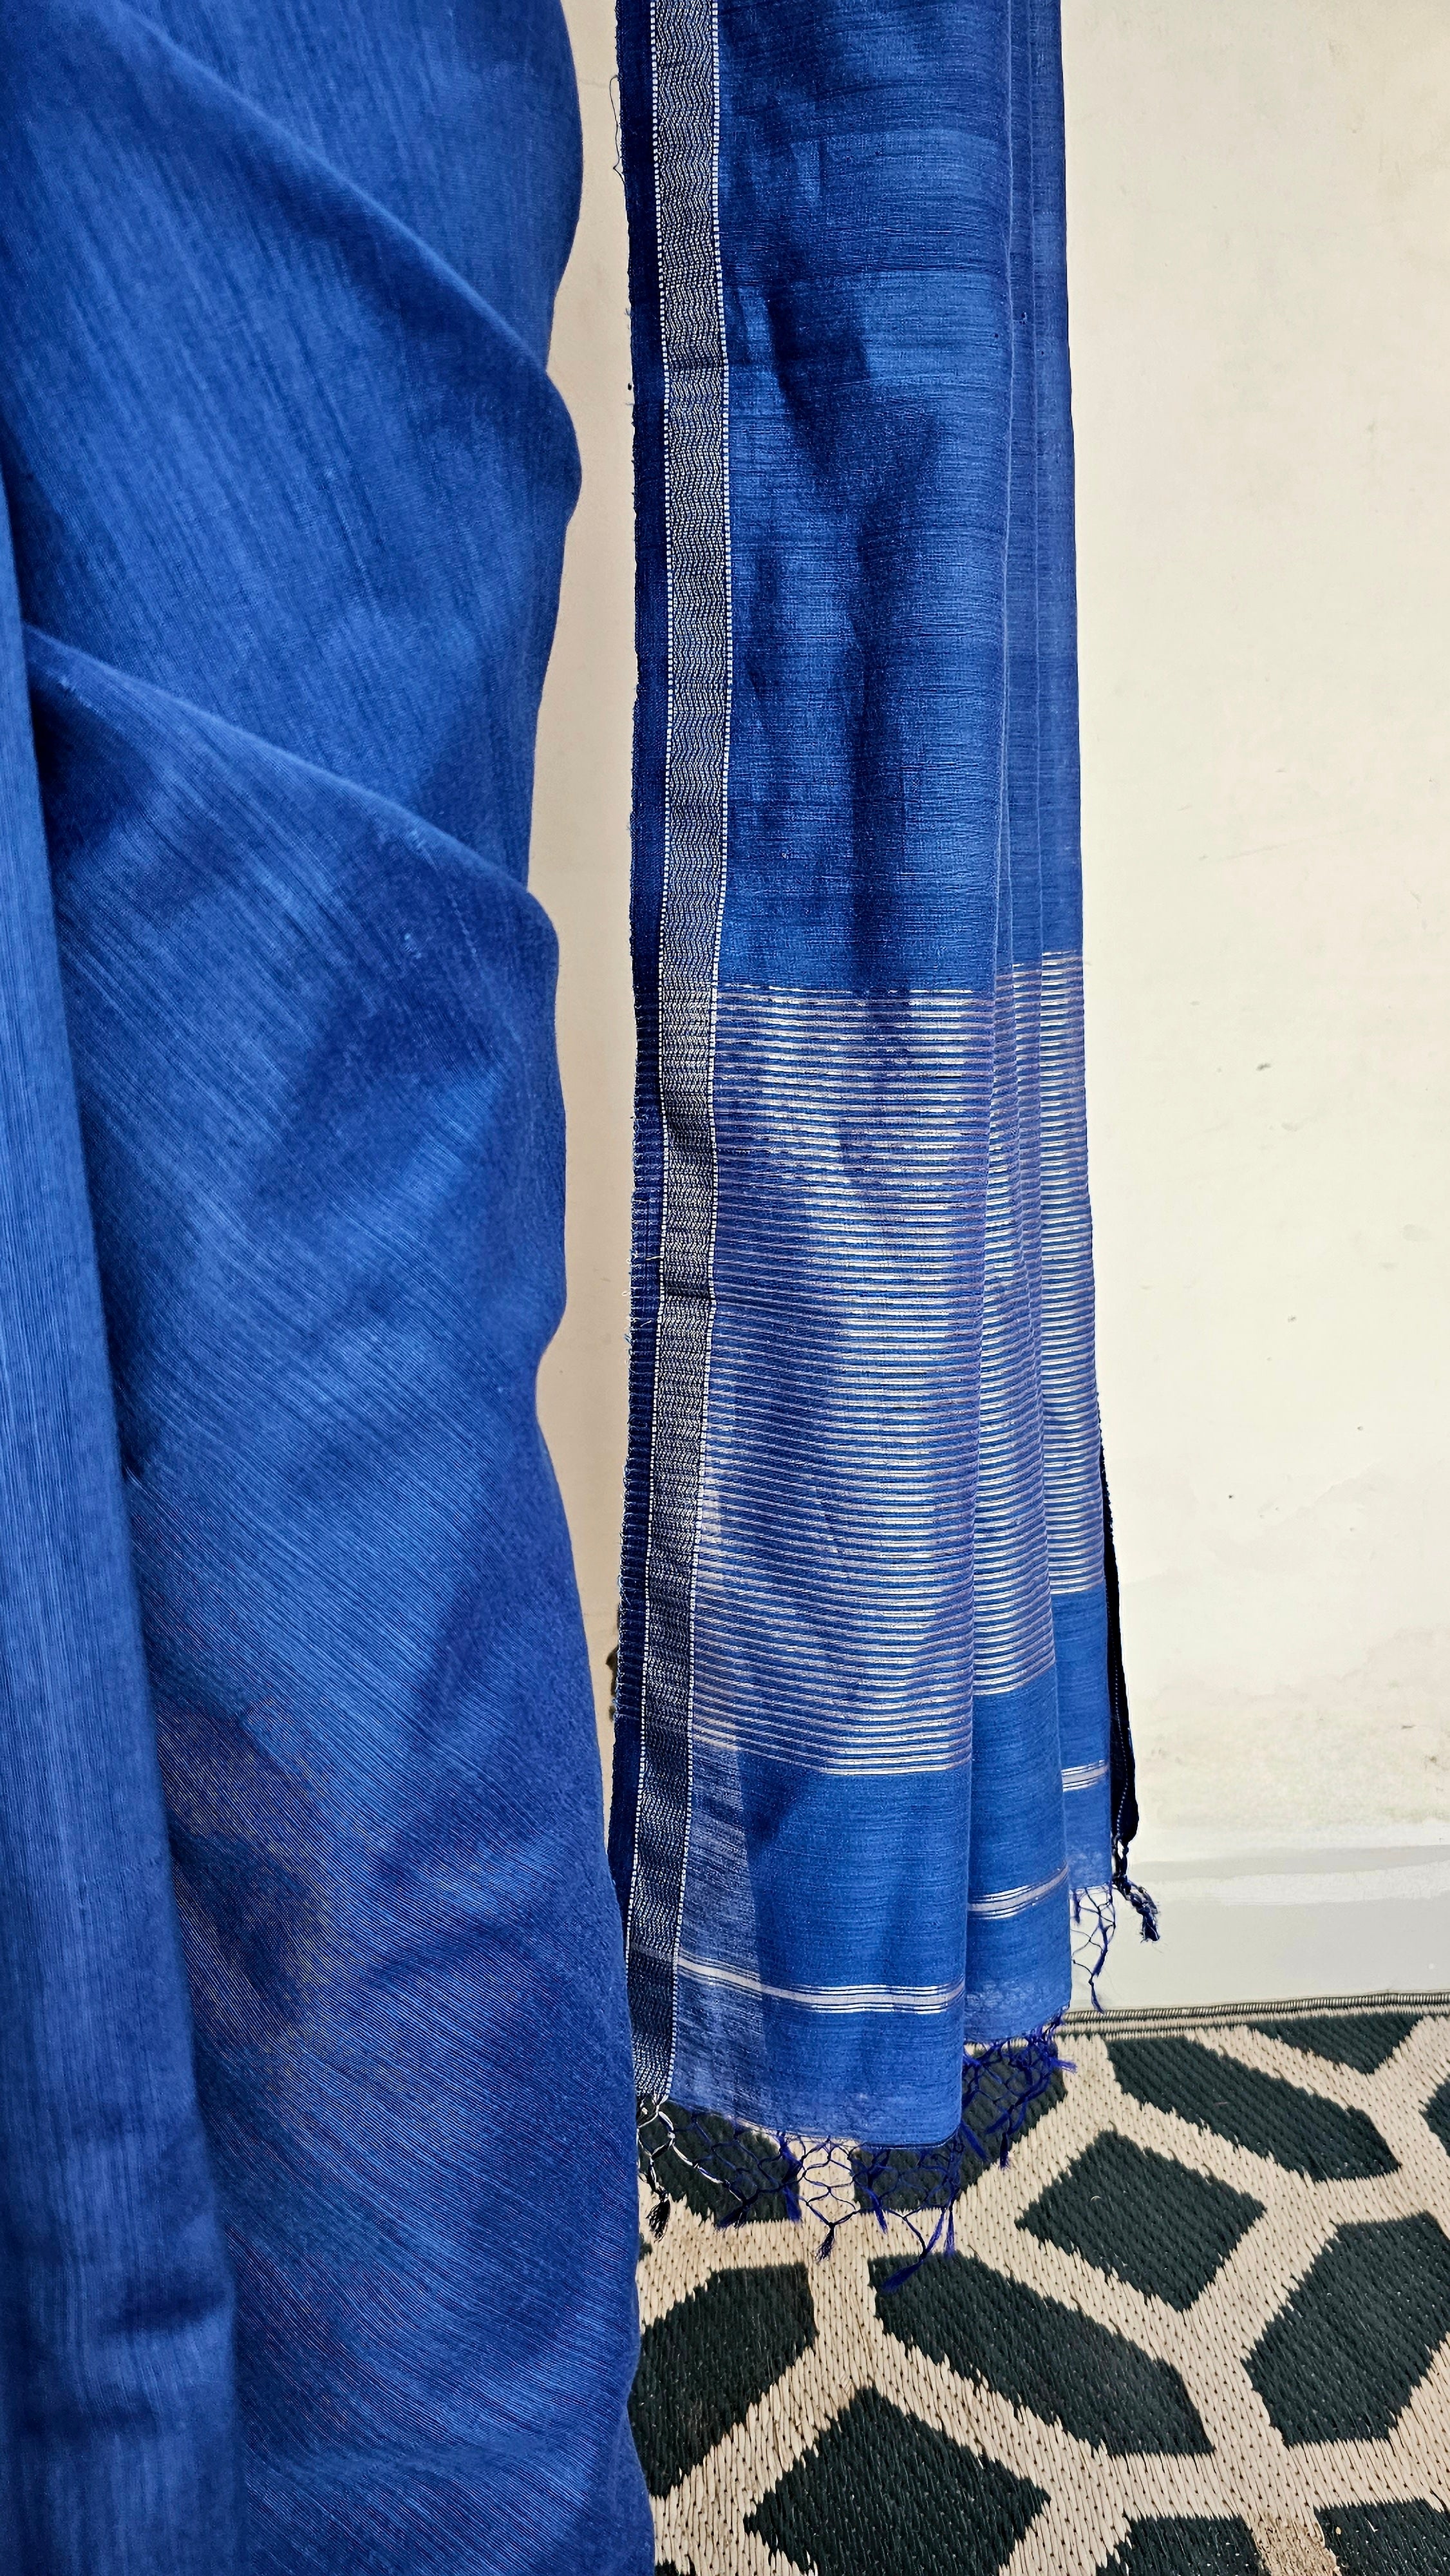 Narmada's Silver Touch: Handspun Cotton Weft Saree in Beautiful Blue